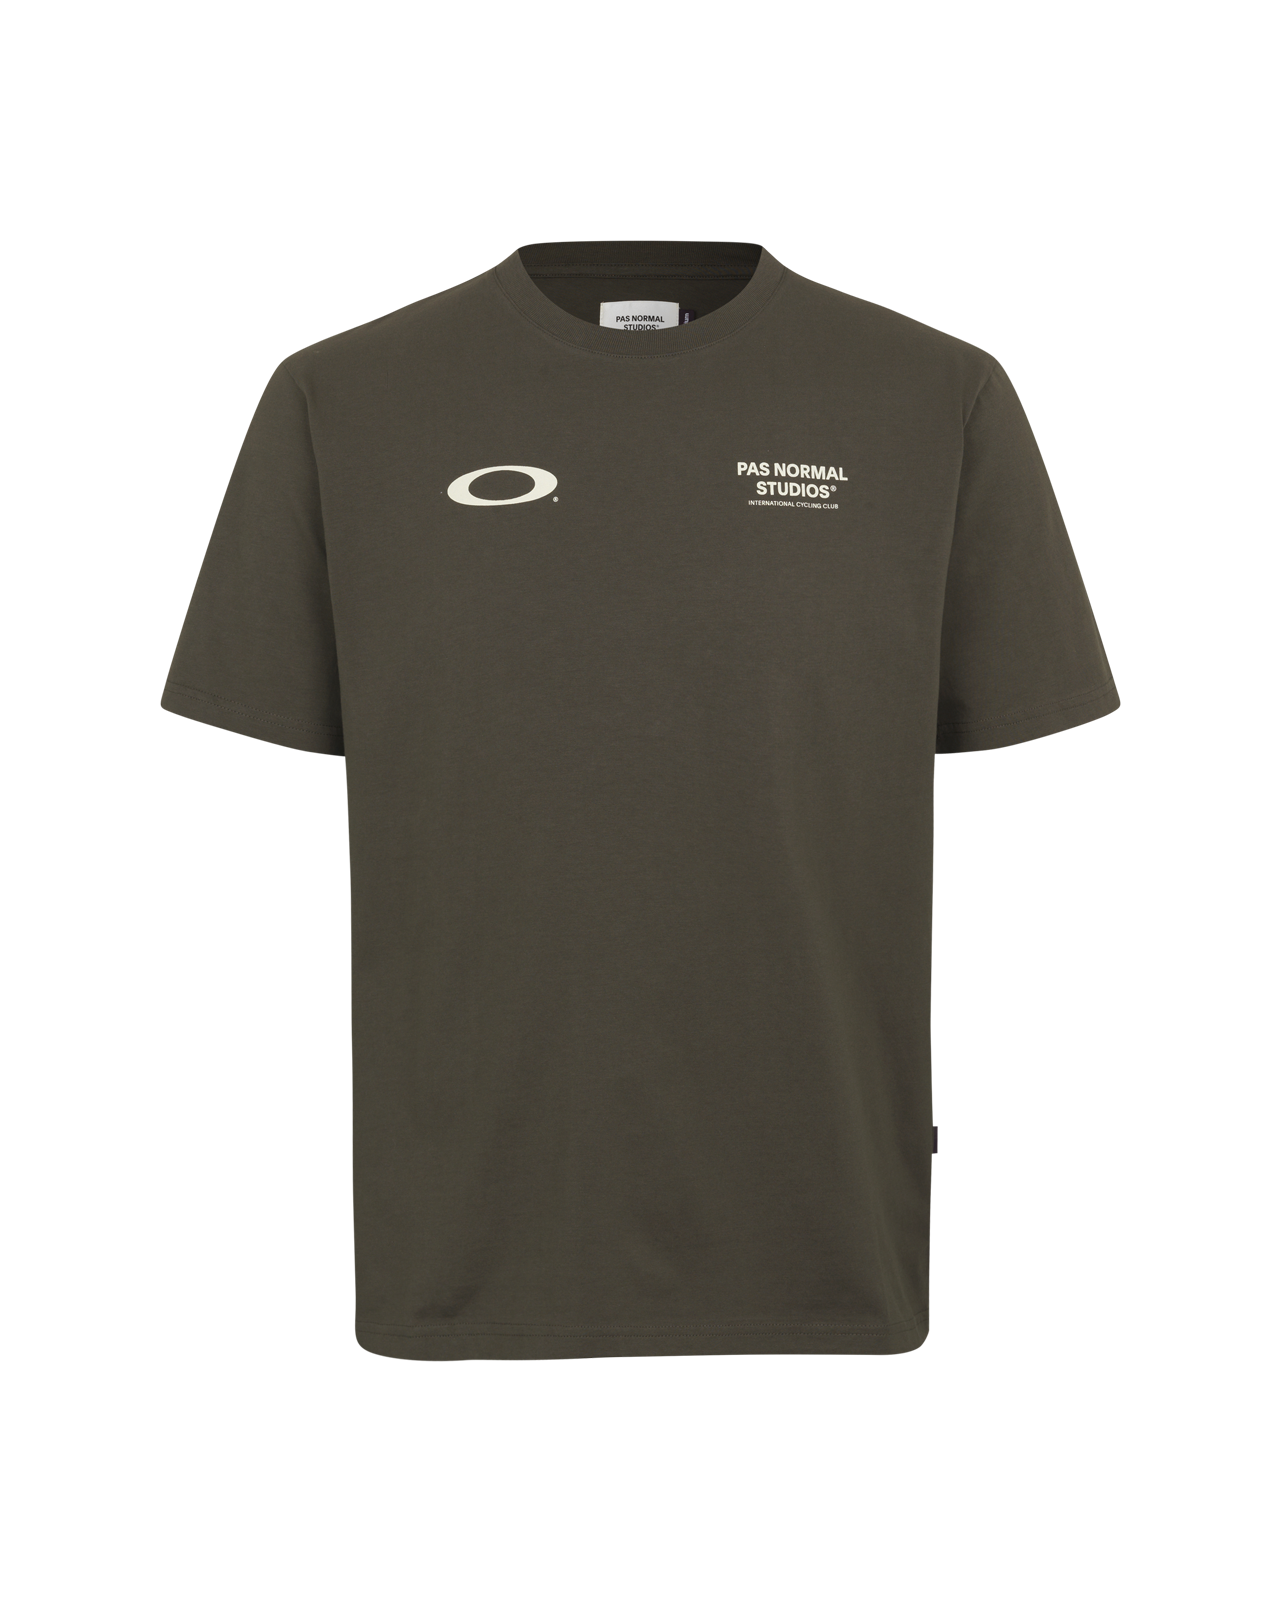 Oakley x Pas Normal Studios Off-Race T-Shirt - Black Olive - Pas Normal Studios